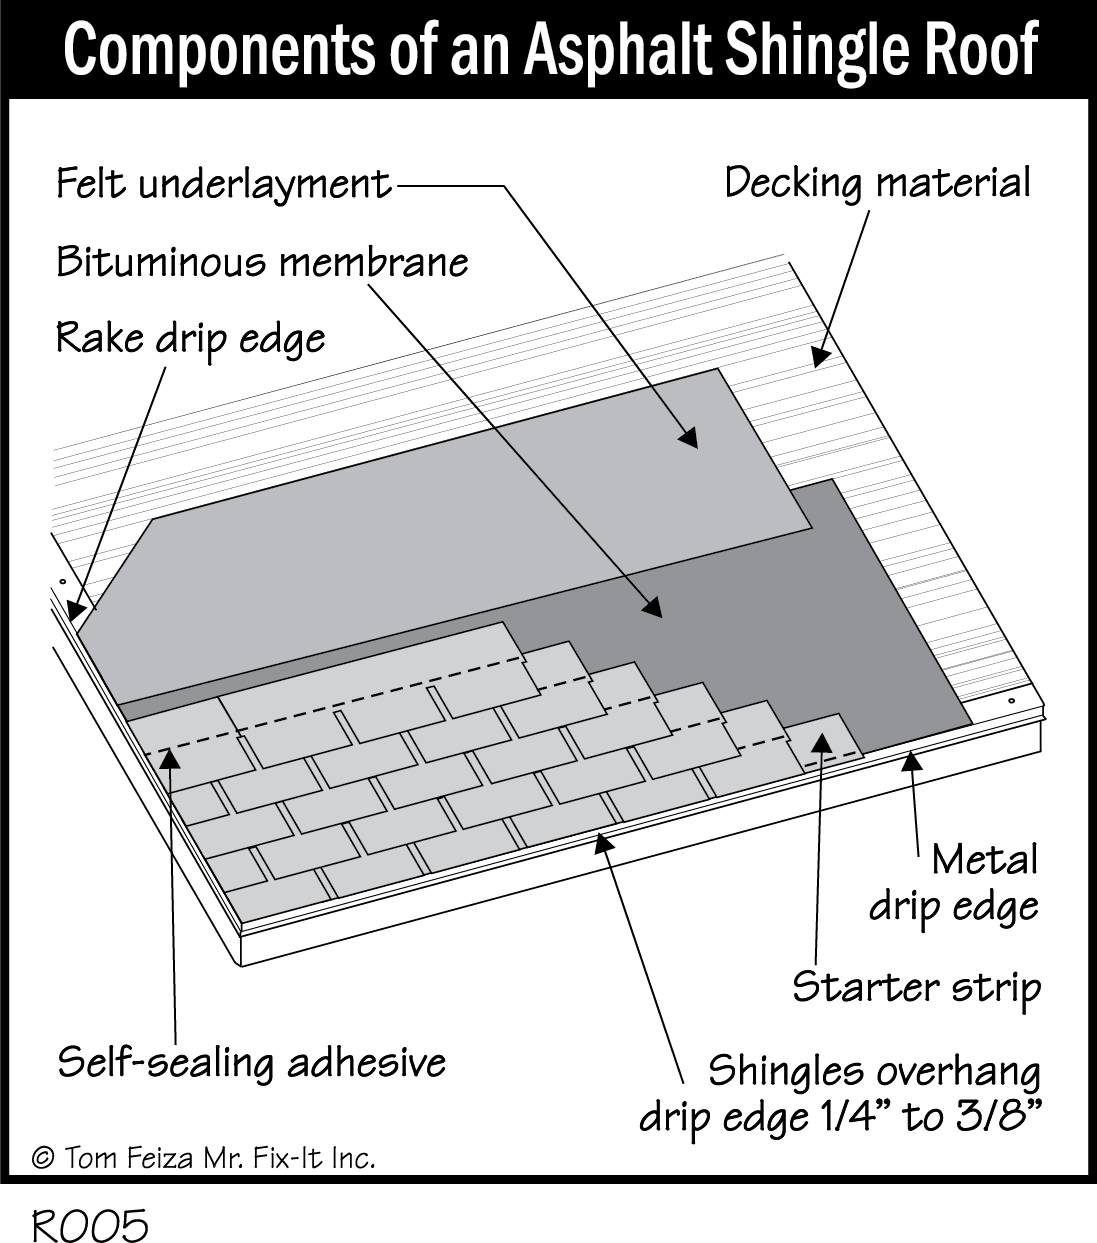 R005 - Components of an Asphalt Shingle Roof